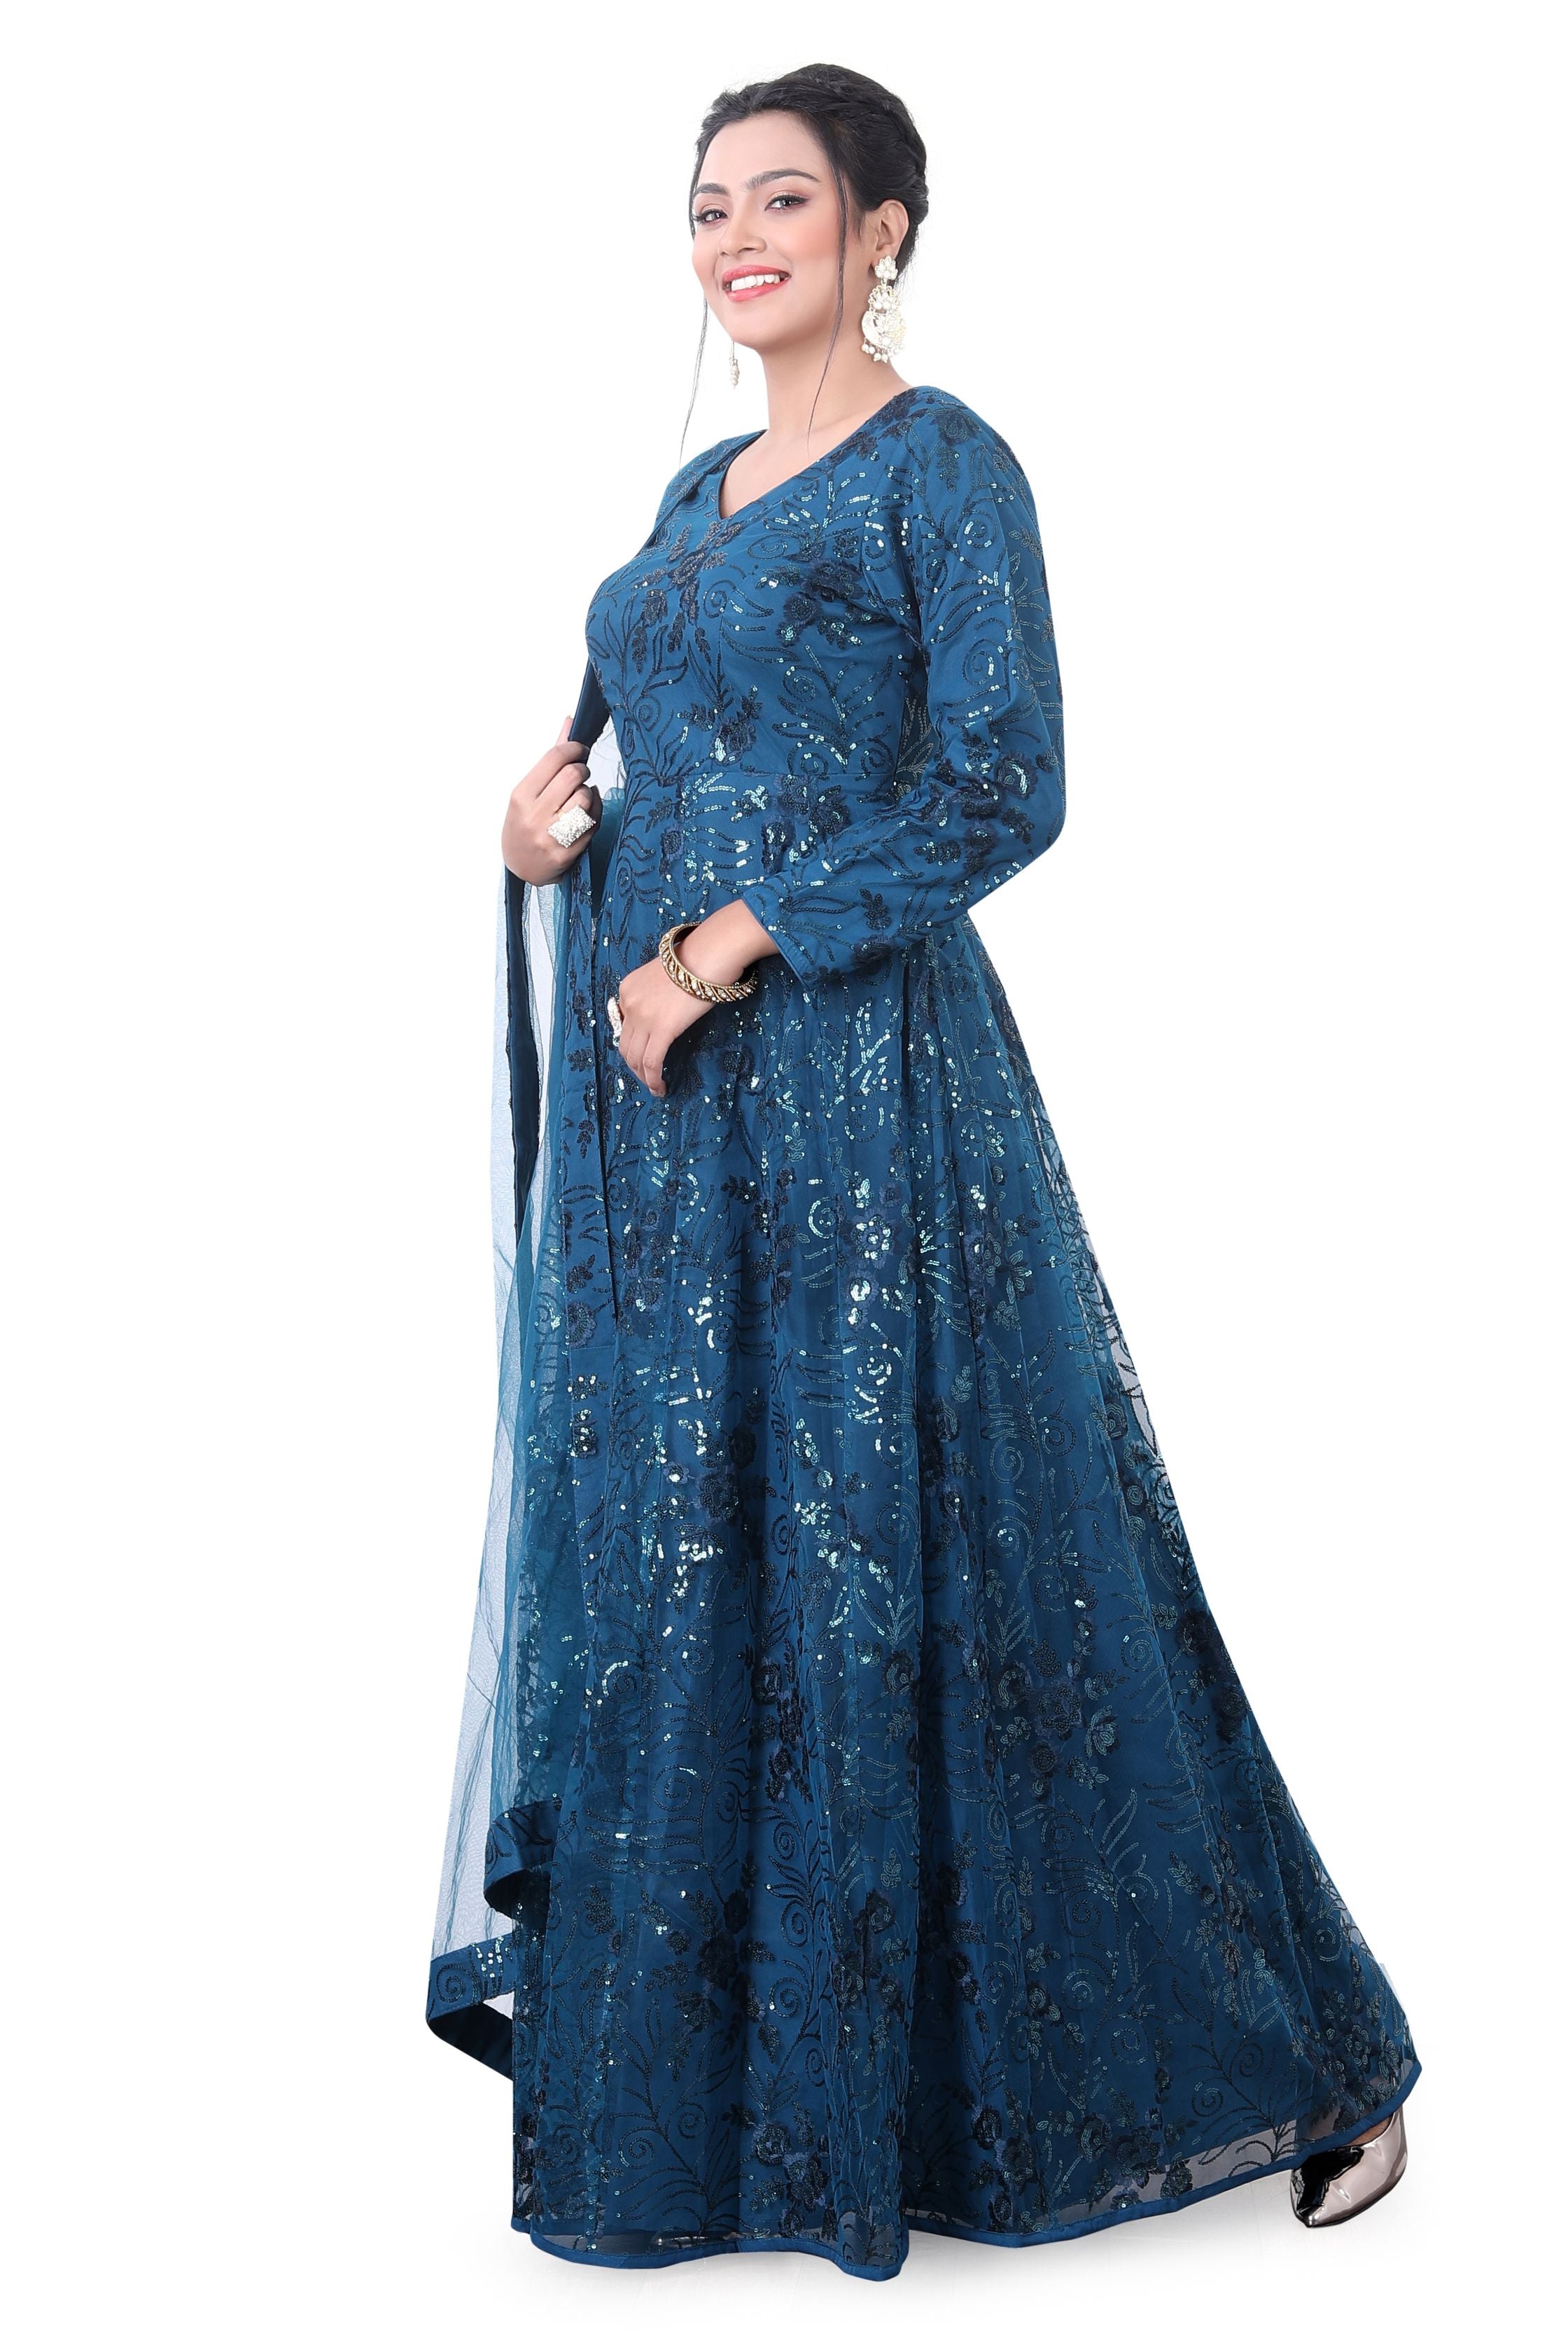 Peacock Blue Floor Length Anarkali Gown in Net ANS-5006